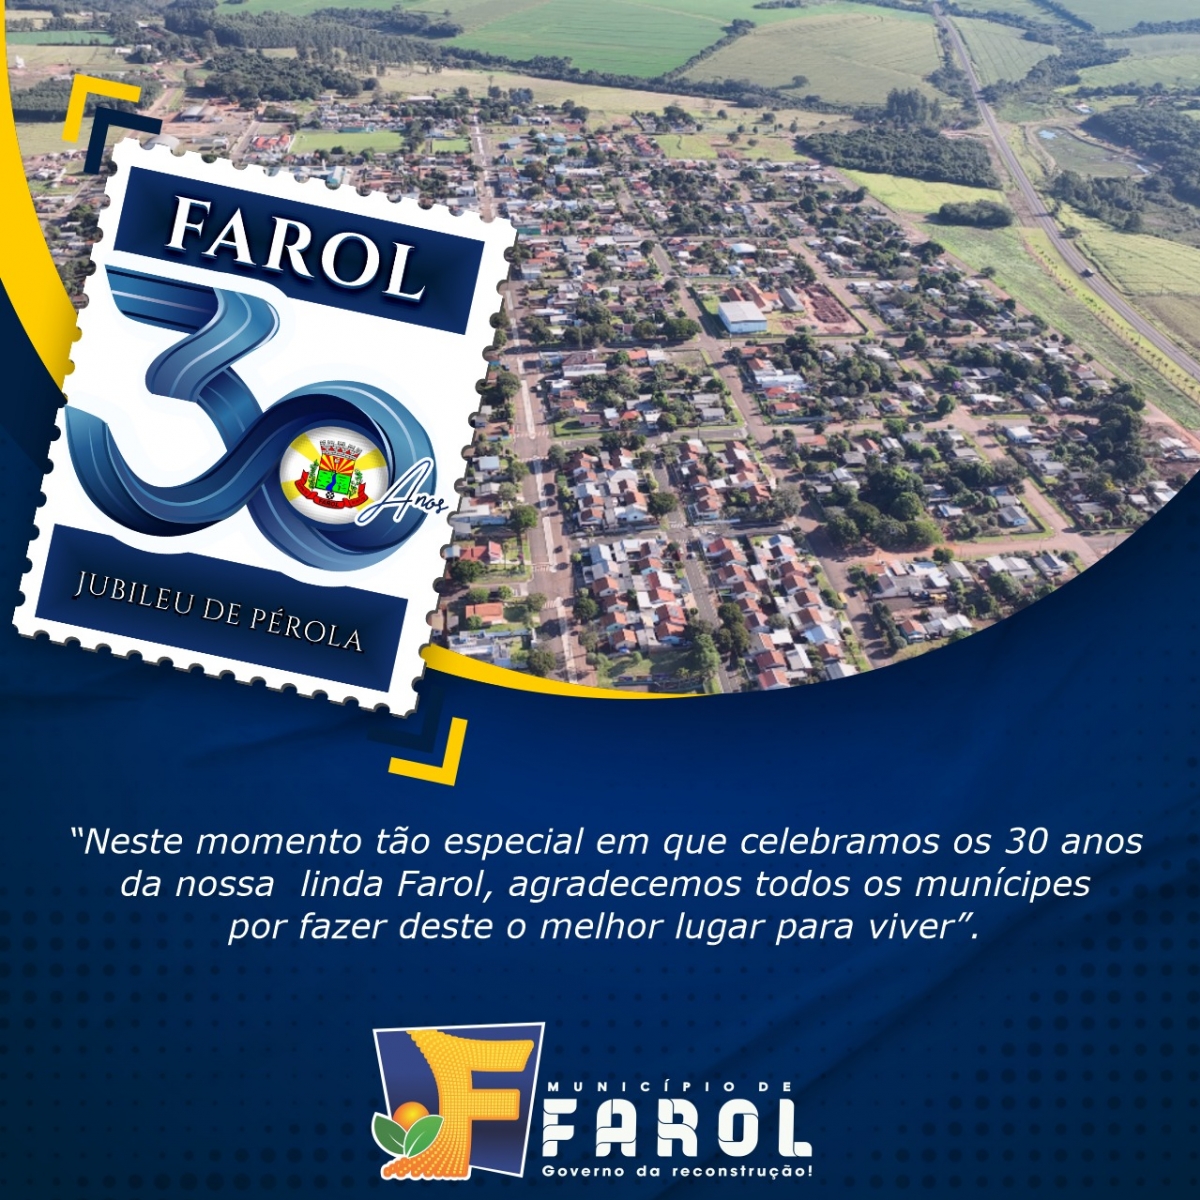 JUBILEU DE PÉROLA: Parabéns Município de Farol pelos seus 30 anos !!!